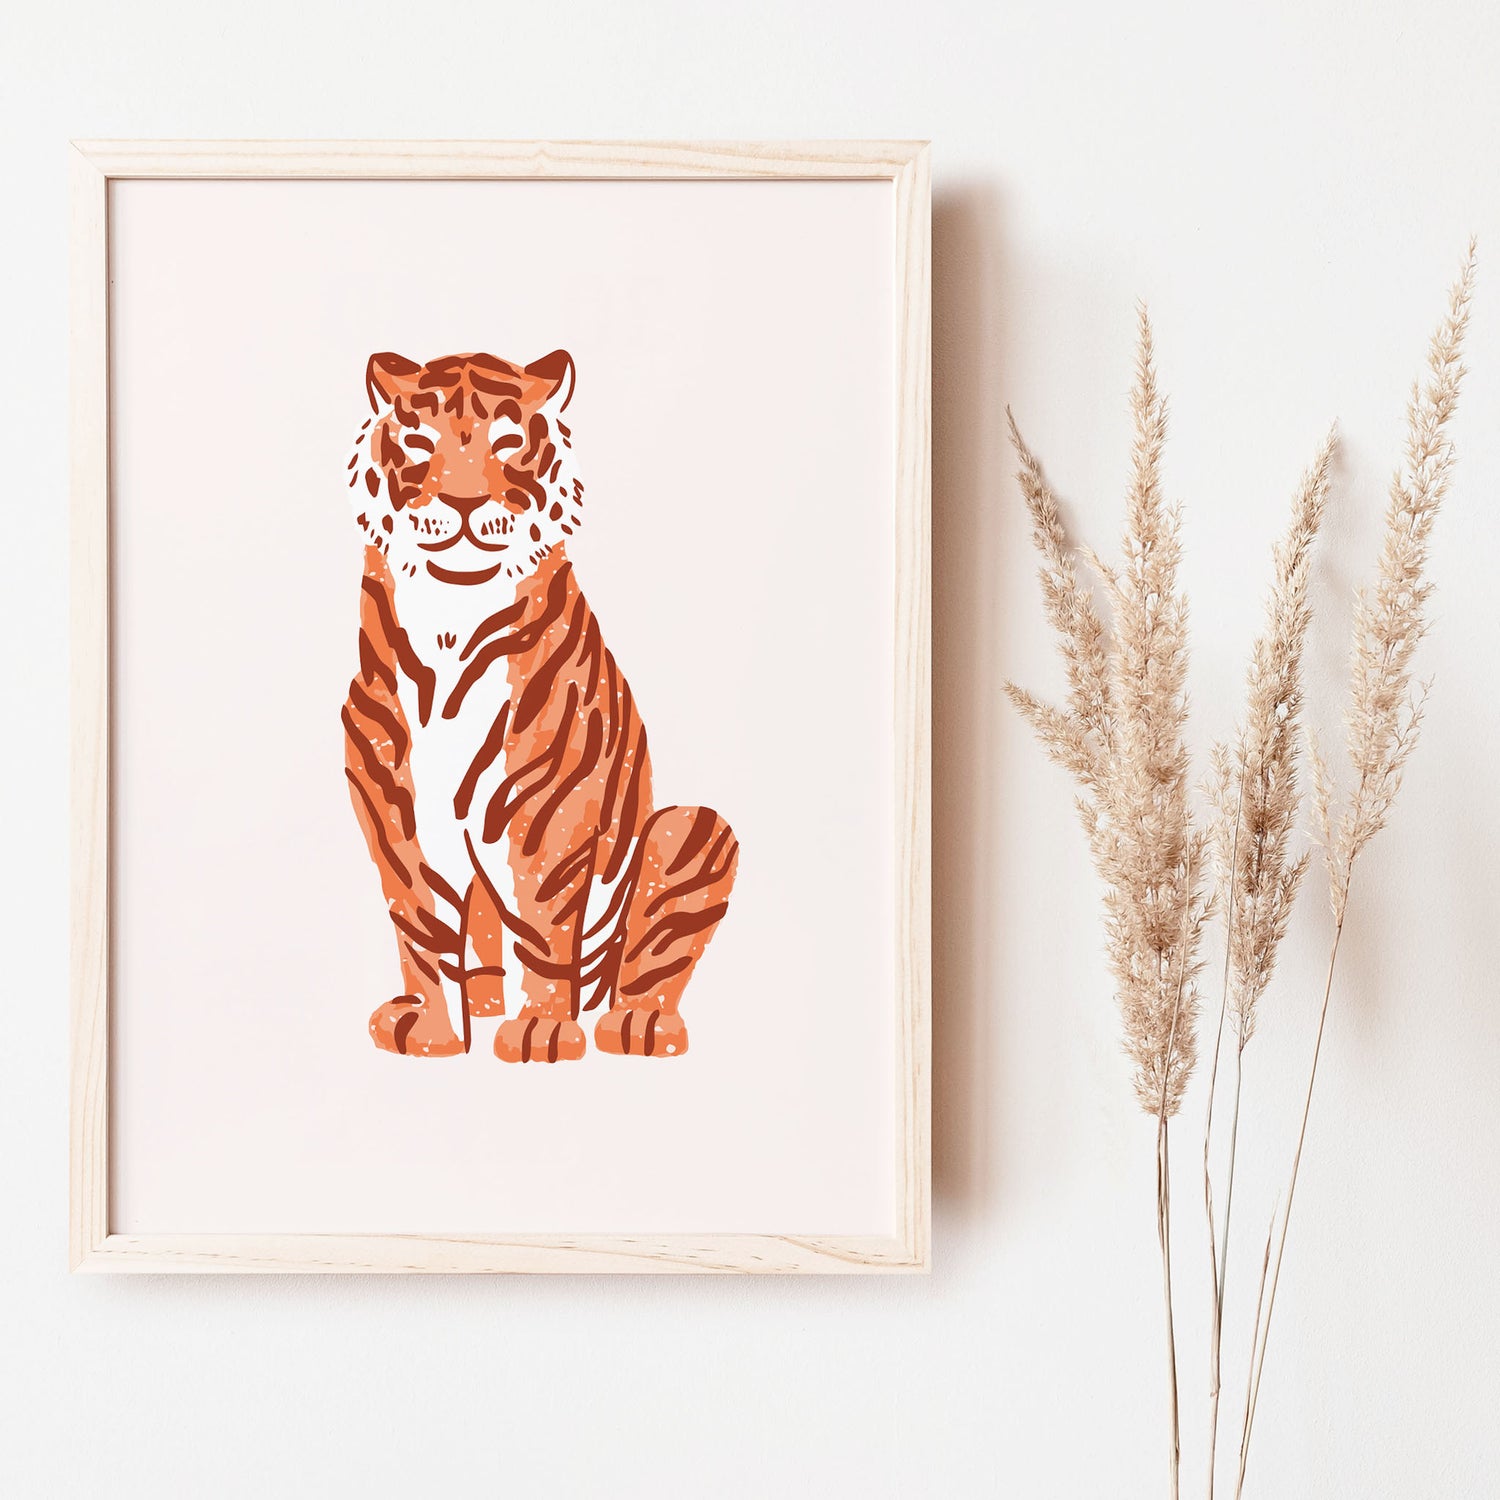 Sitting Tigers art print in orange is great for kids spaces